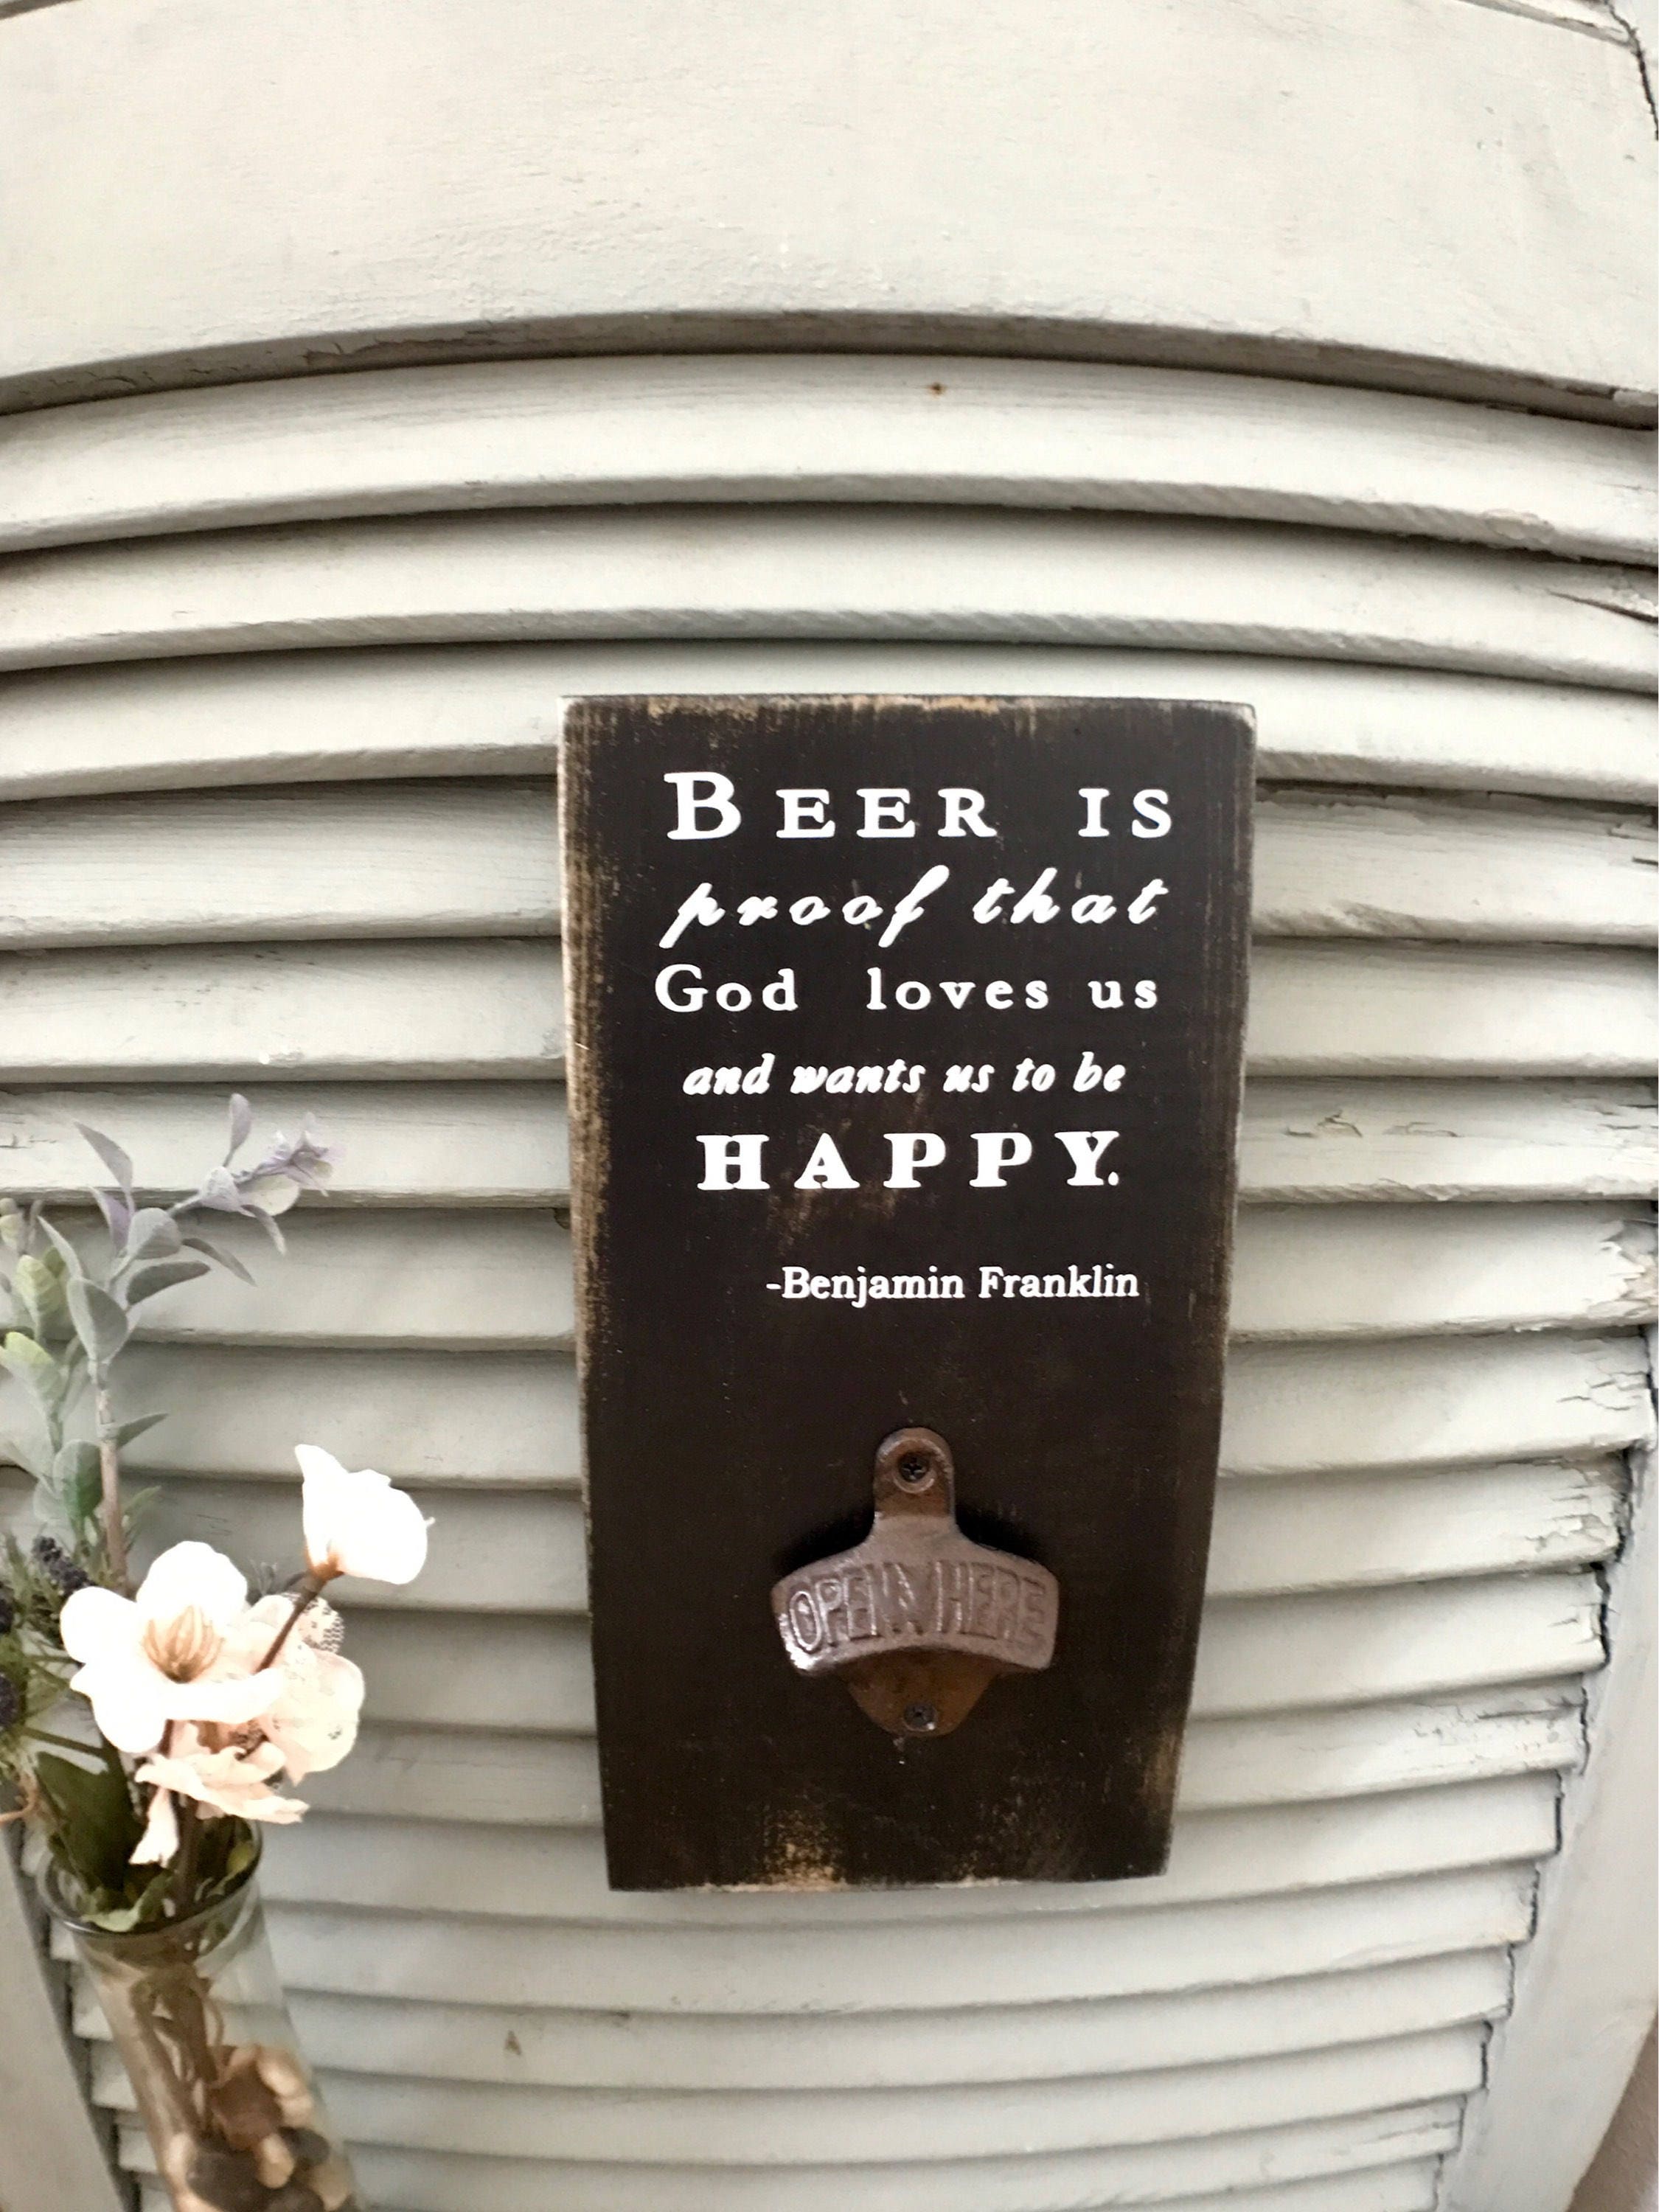 Details Rustic wall mounted beer bottle opener sign reading " Beer is proof god loves us